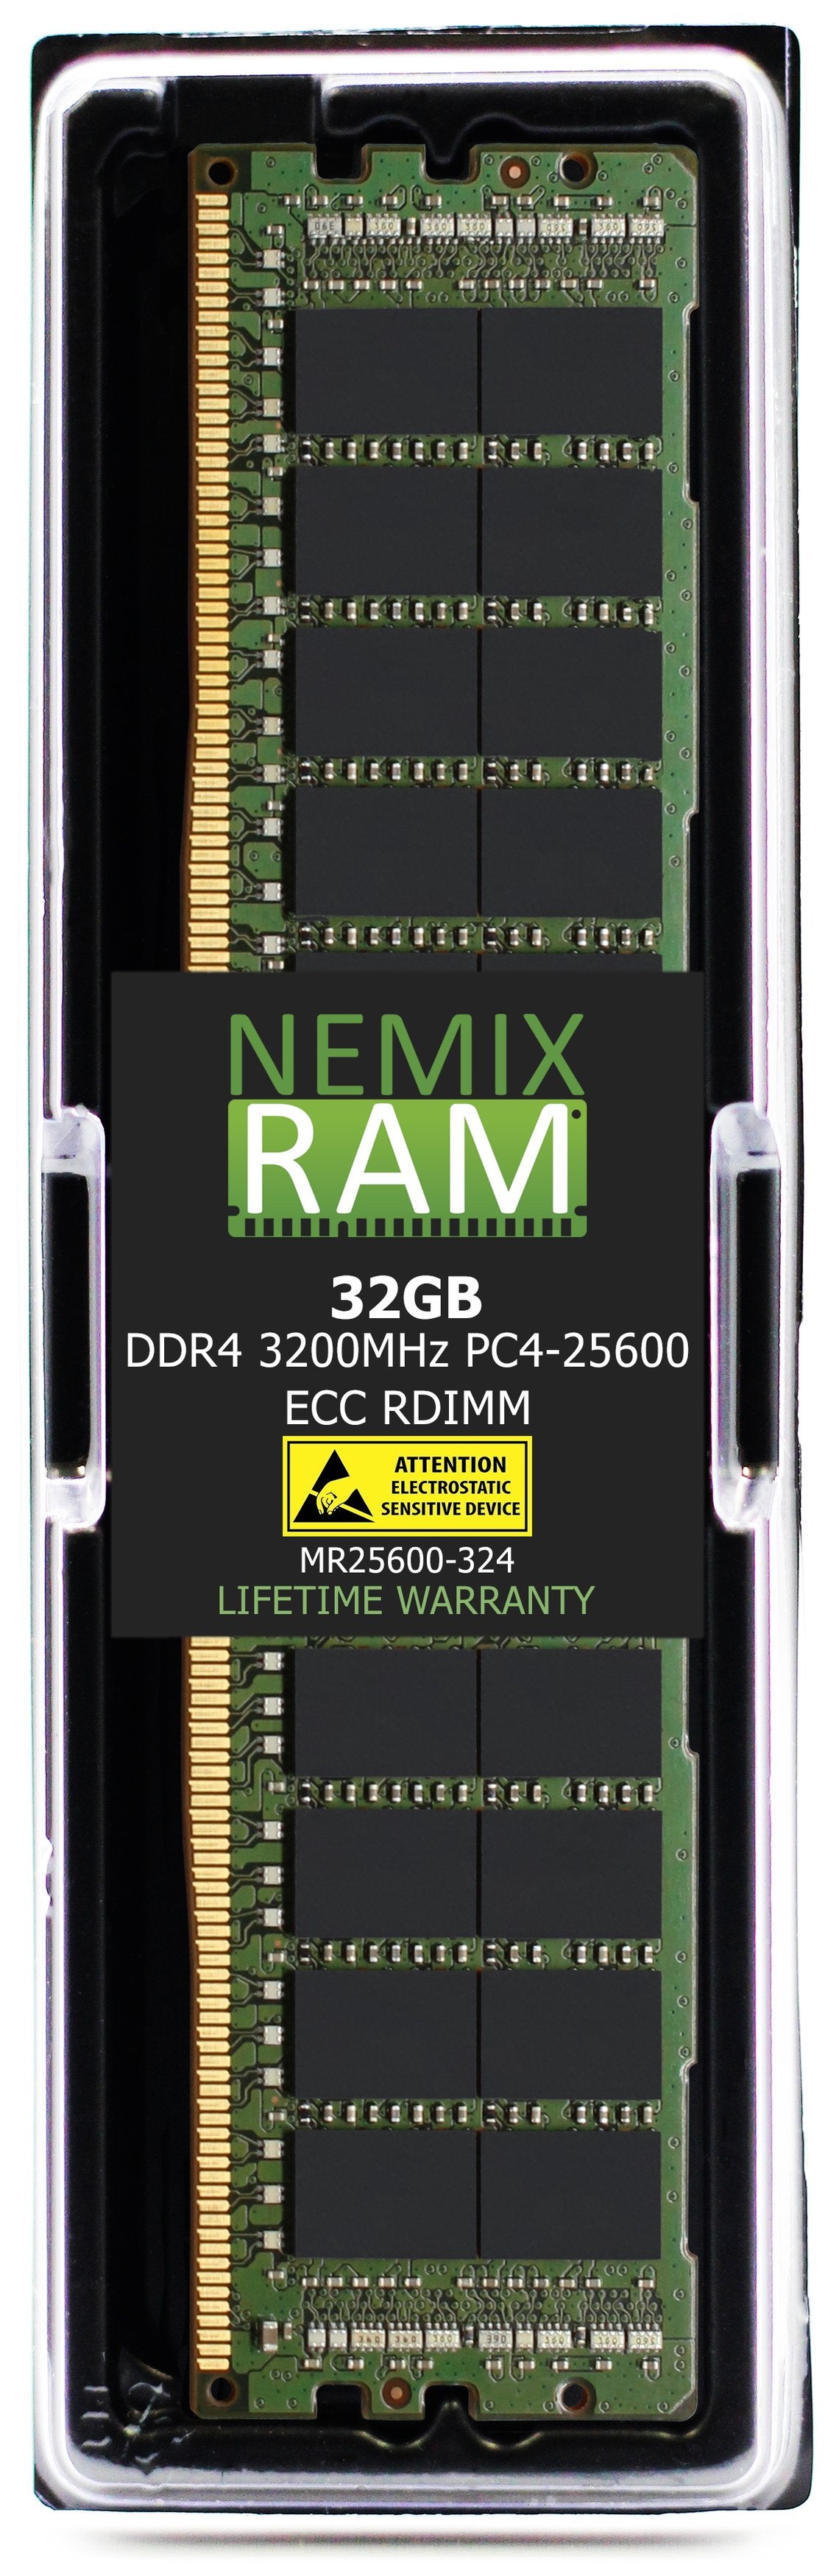 32GB DDR4 3200MHZ PC4-25600 RDIMM Compatible with Supermicro MEM-DR432L-SL02-ER32